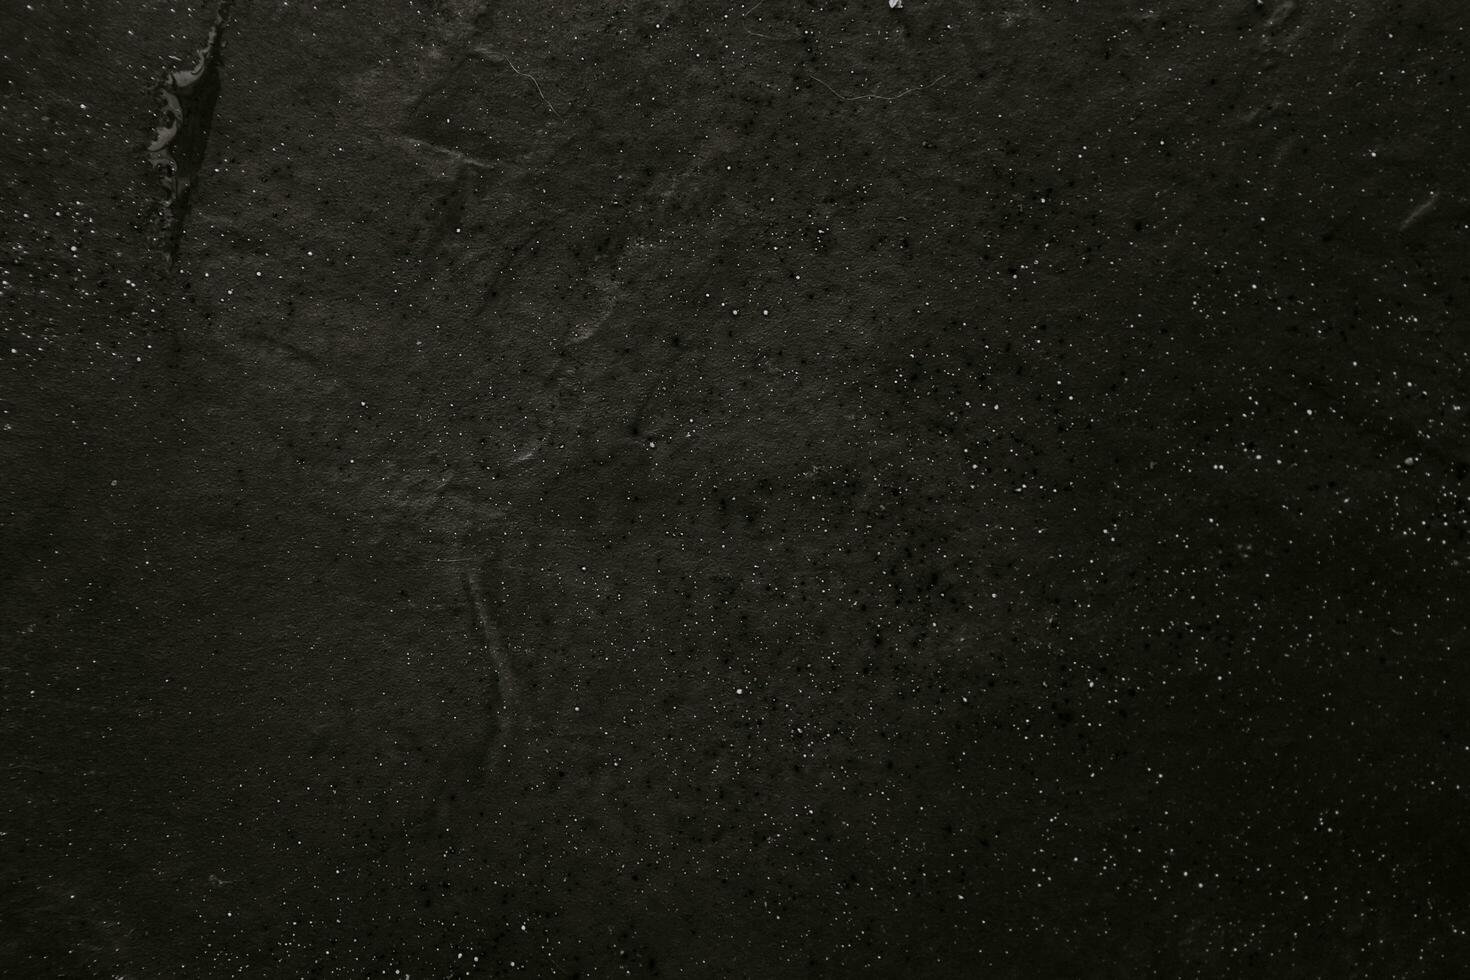 Old black background. Grunge texture. Dark wallpaper. Blackboard, Chalkboard, room Wall. photo